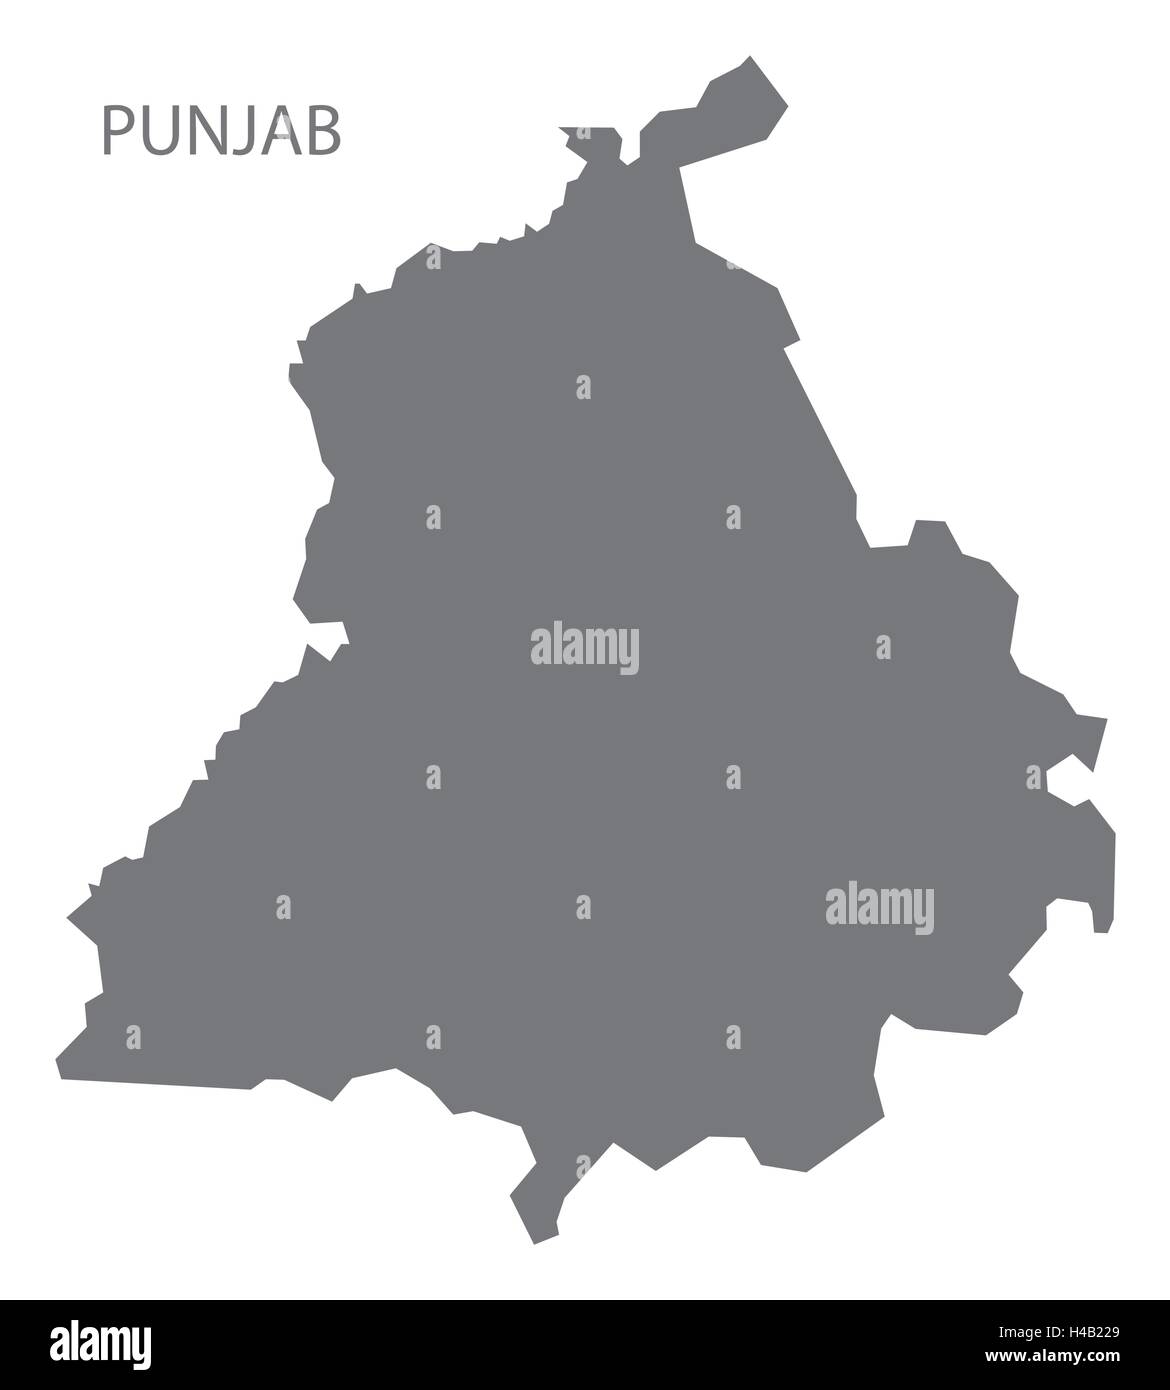 Punjab india grey map illustration Stock Vector